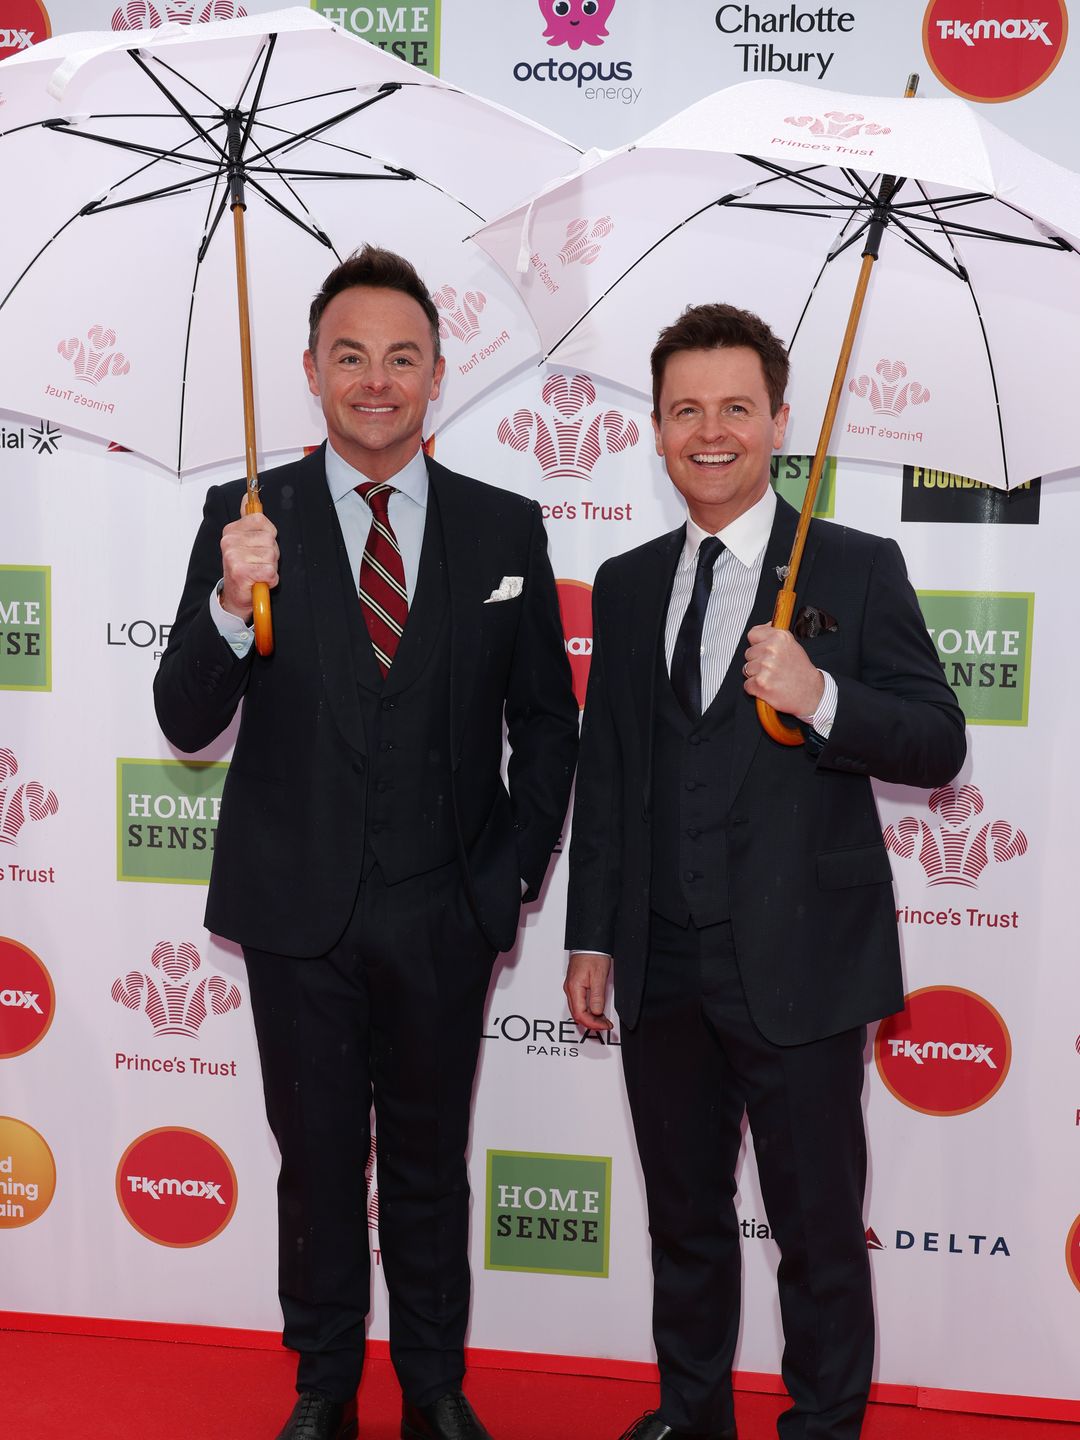 Ant and Dec in suits holding umbrellas